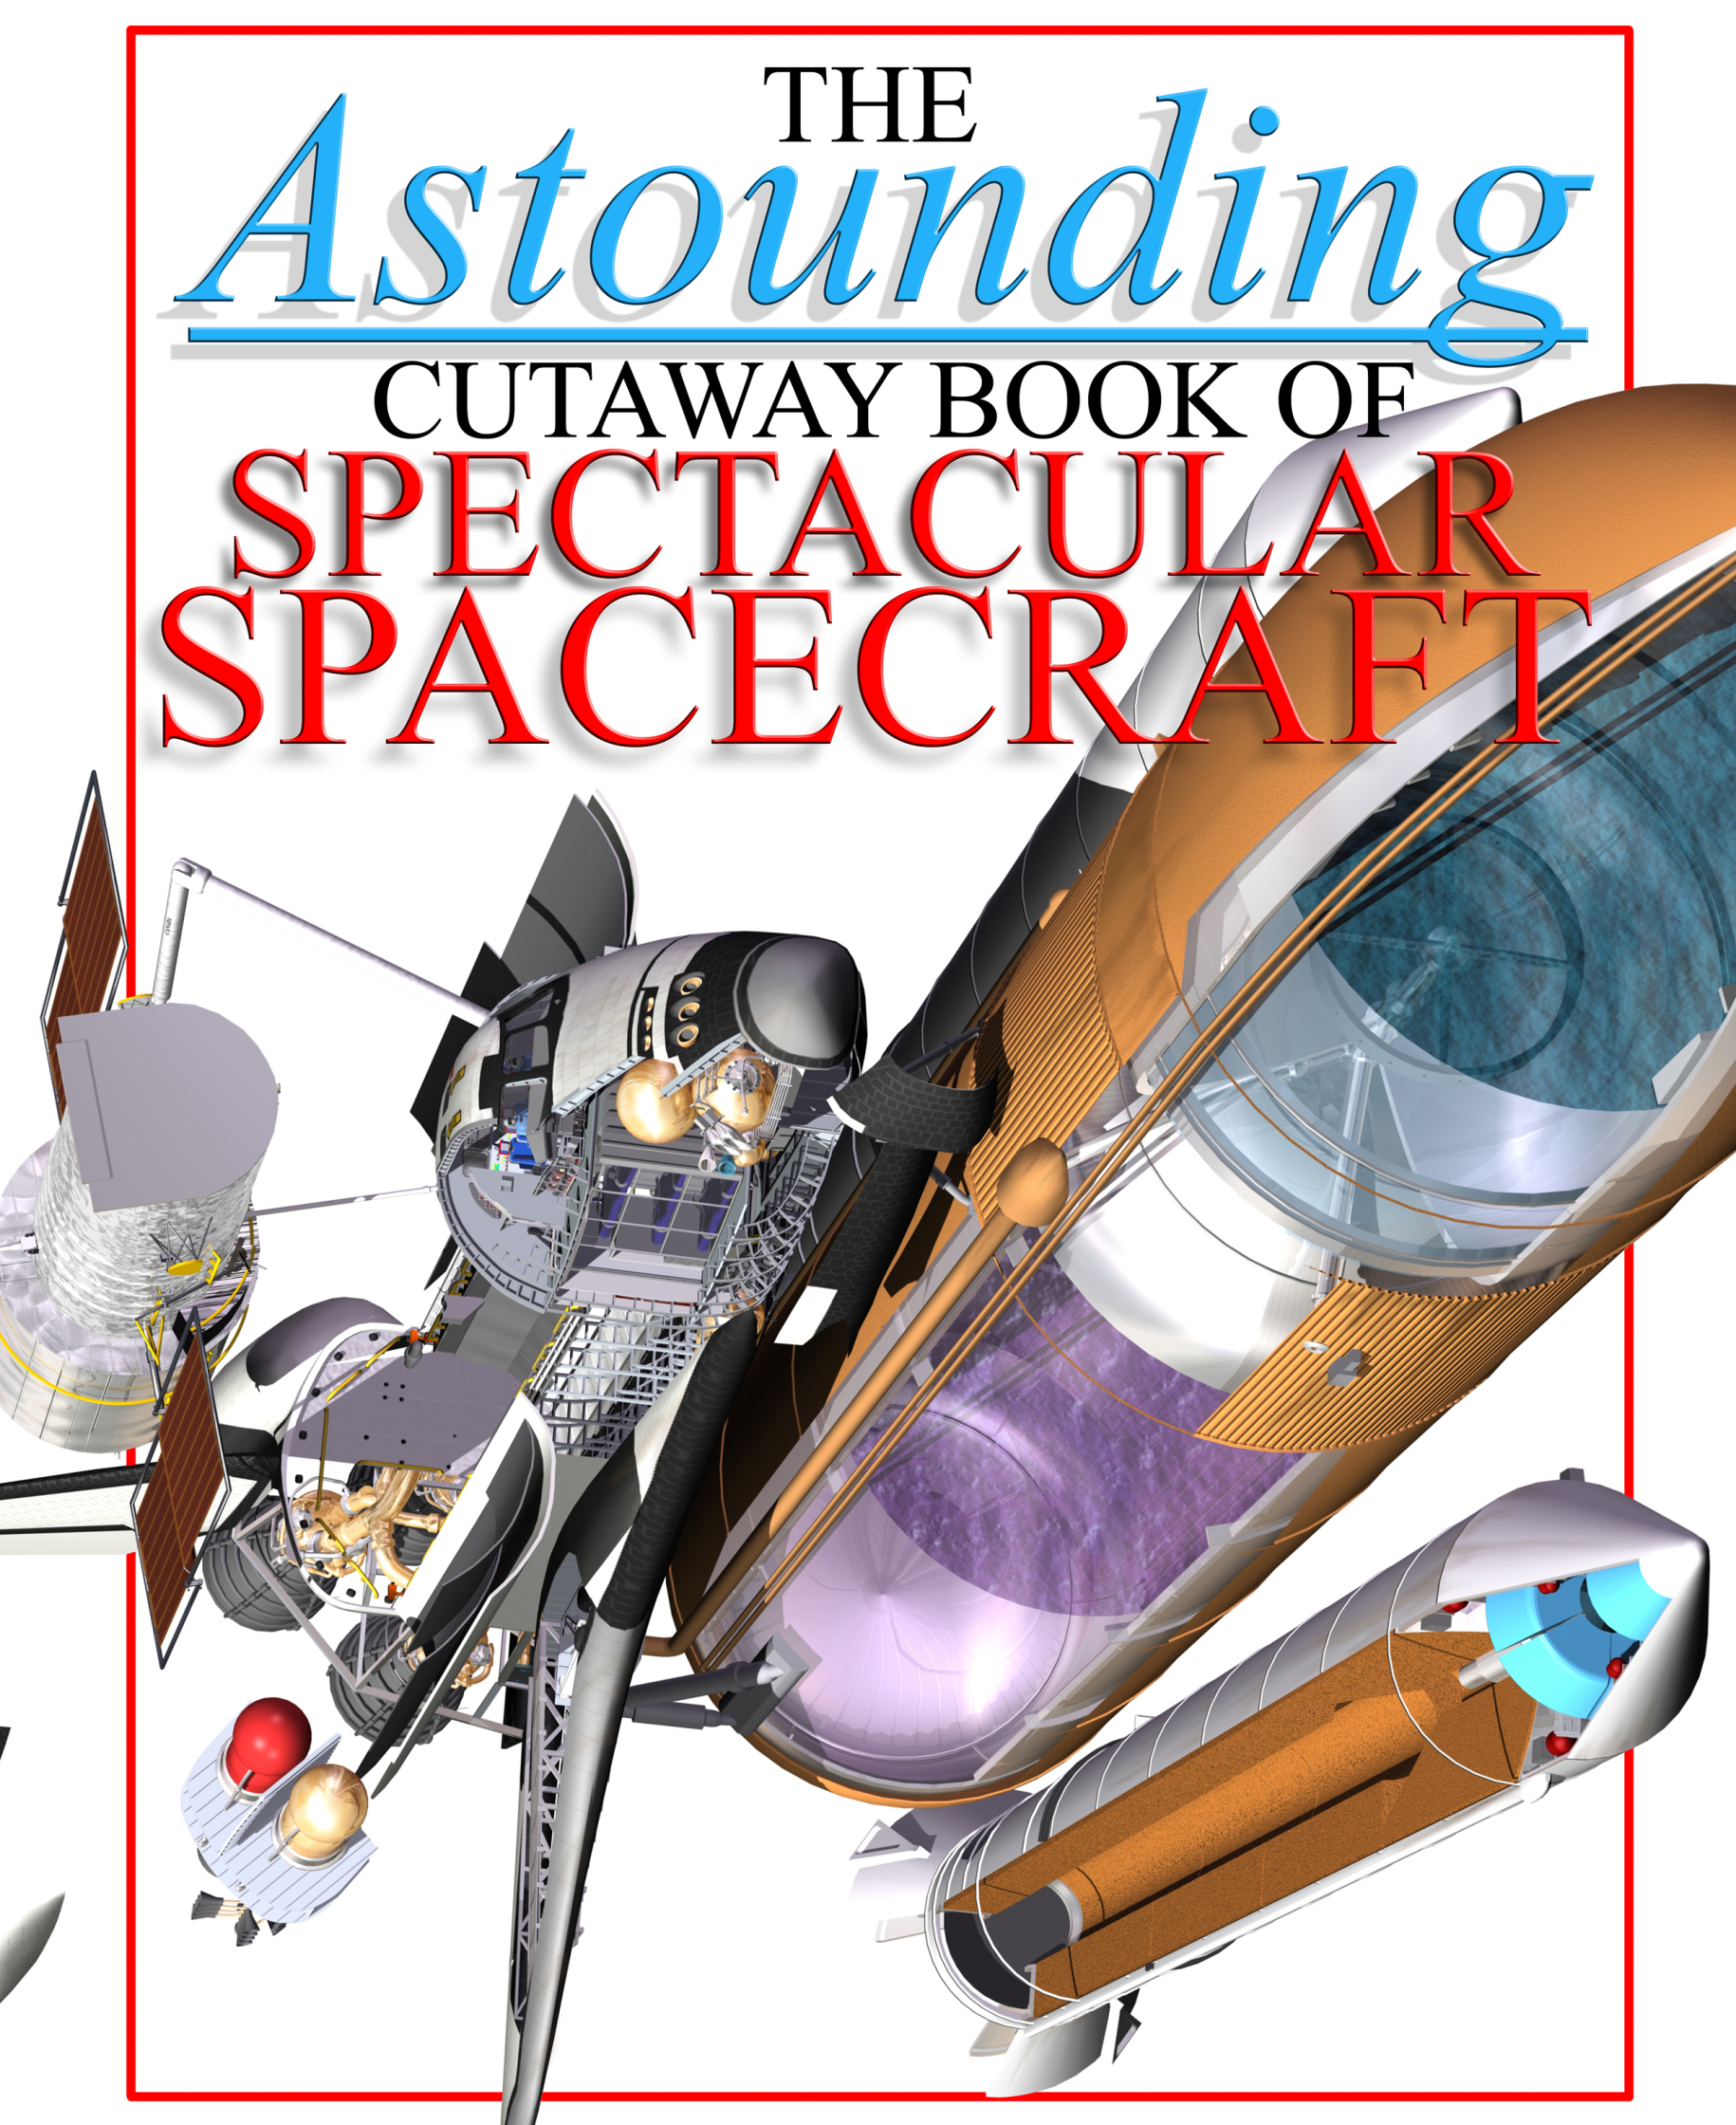 shuttle cutaway cover.jpg